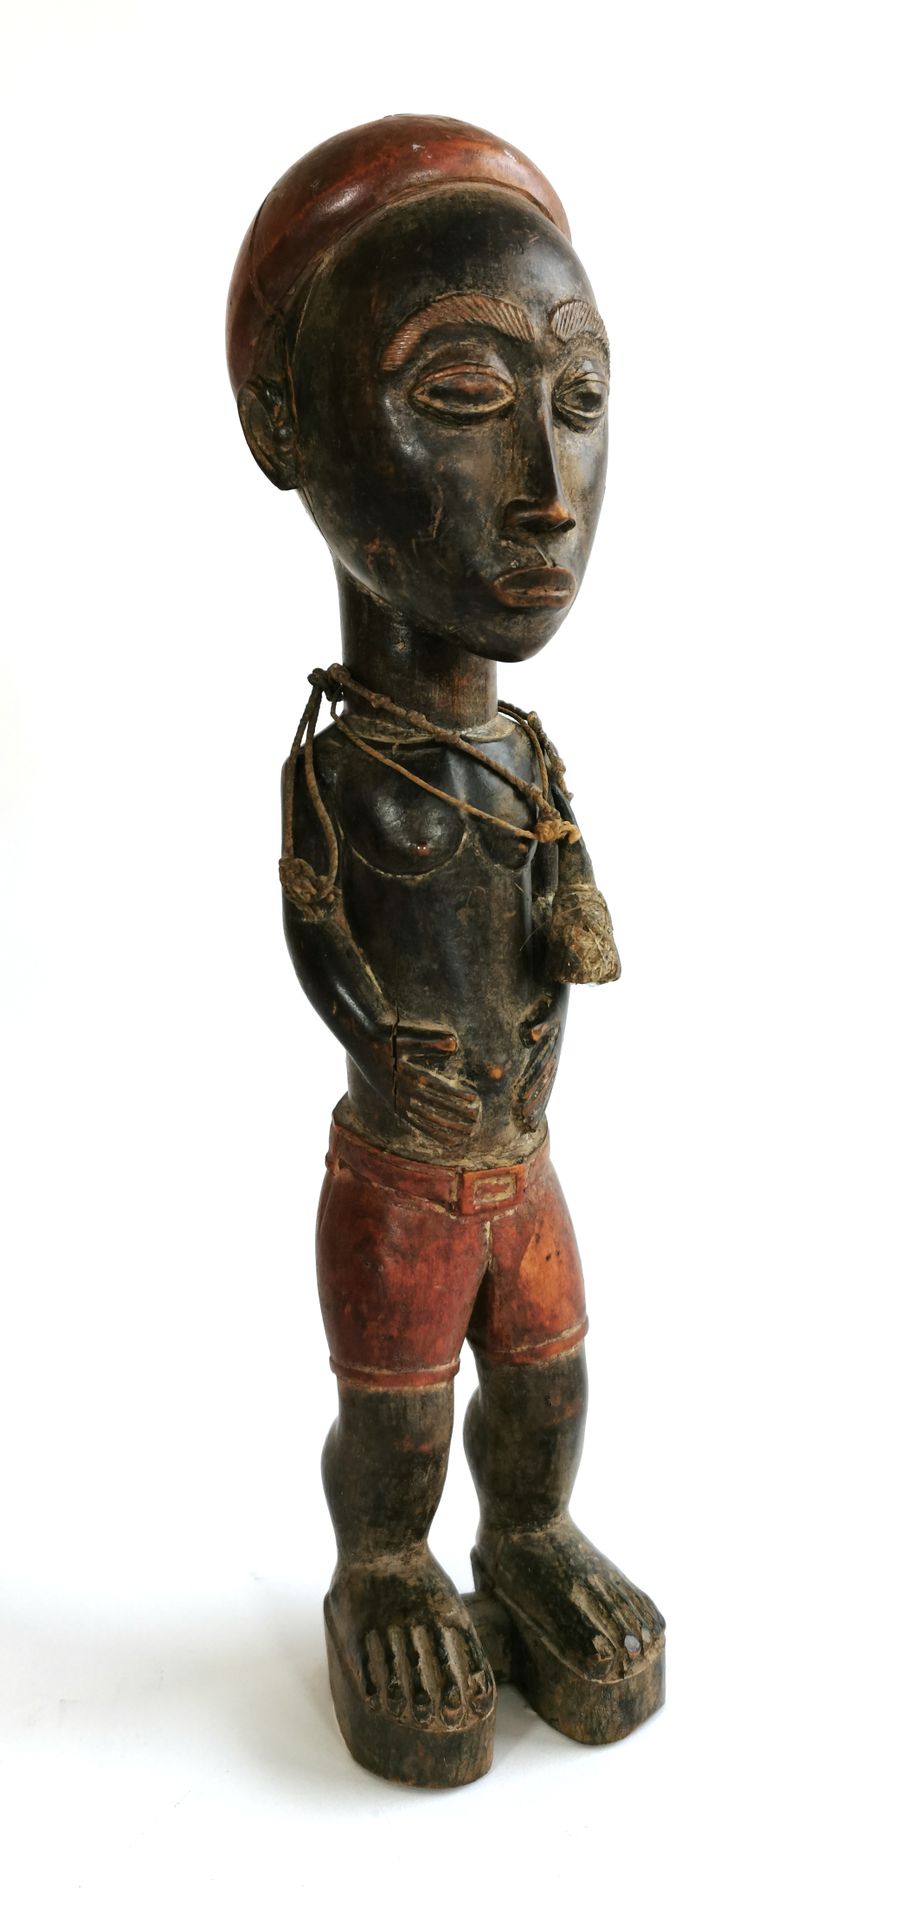 Null BAOULÉ（象牙海岸）
多色雕刻的木雕像
H.39厘米